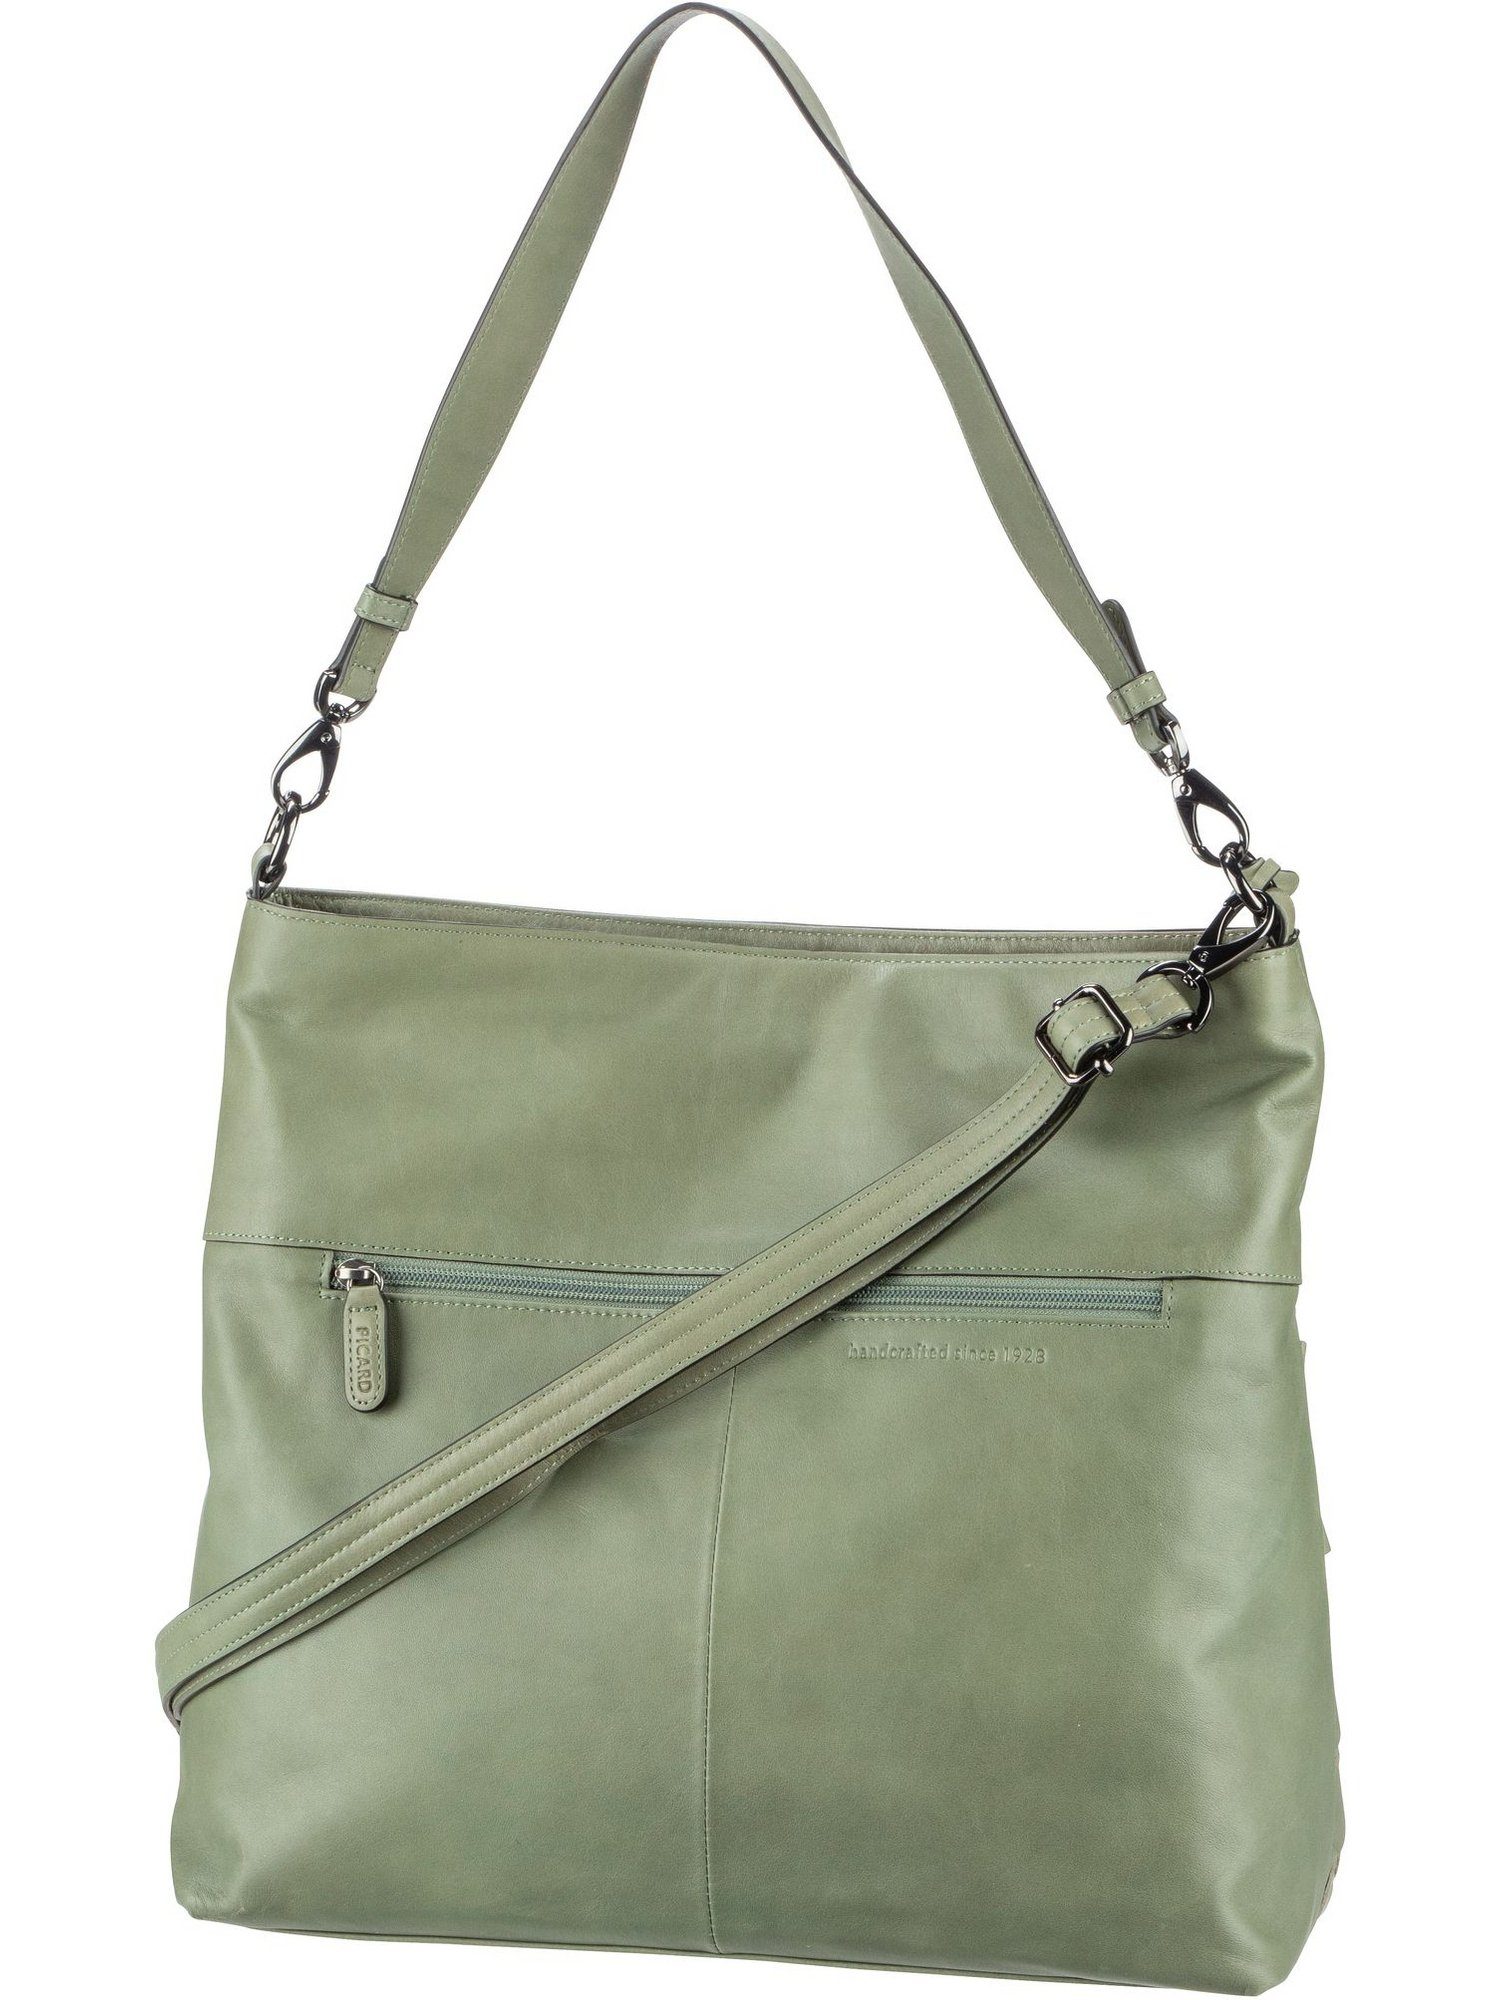 Damen Handtaschen Picard Handtasche Savanne 7876, Beuteltasche / Hobo Bag